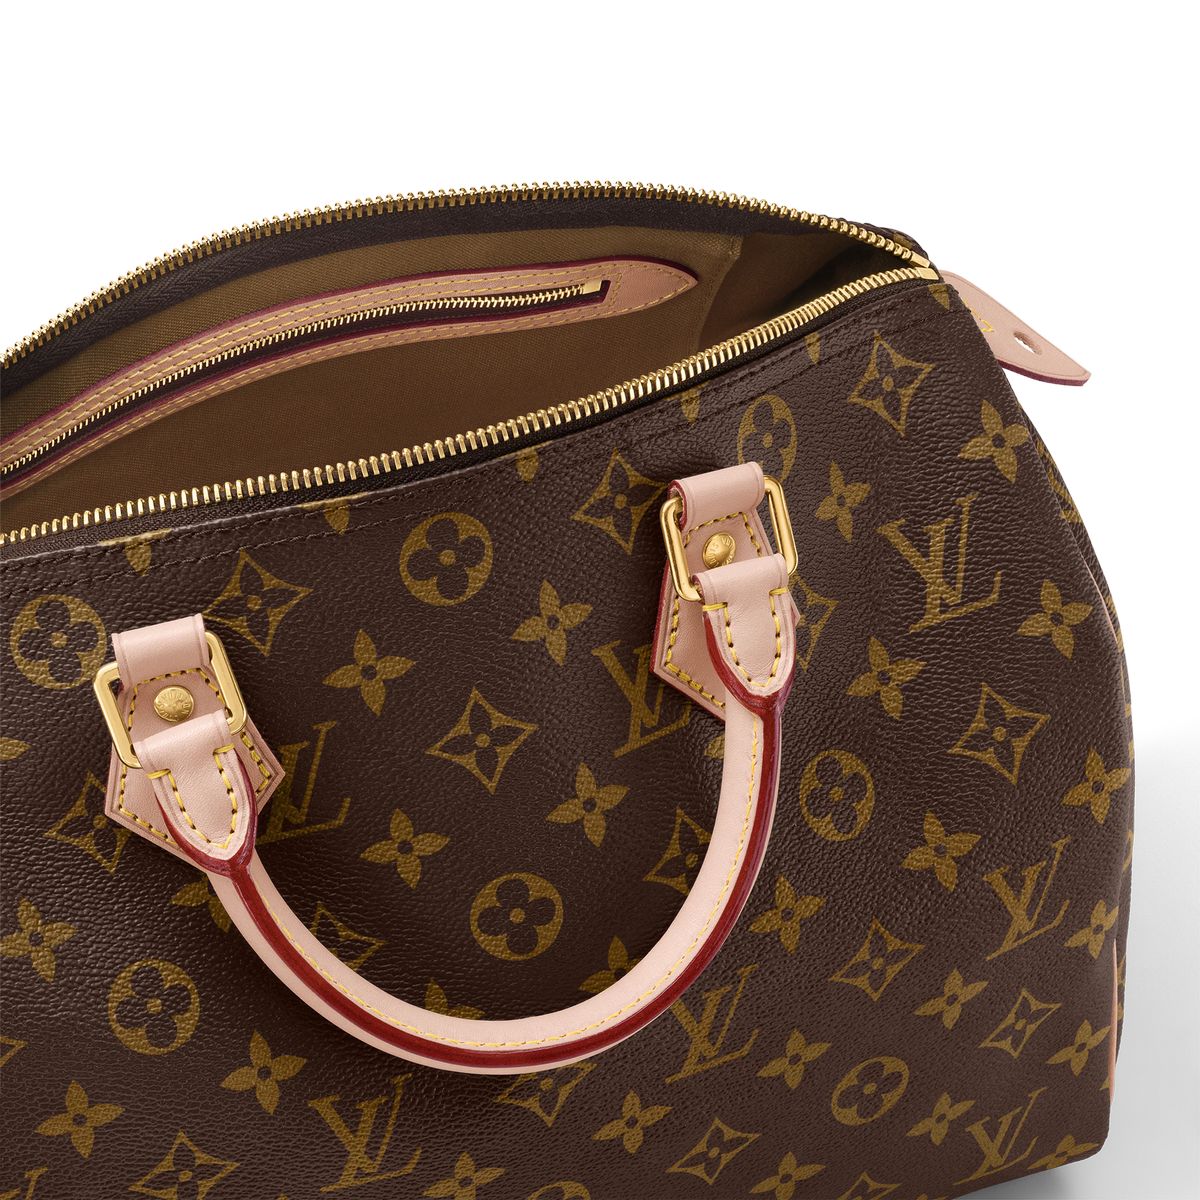 Rihanna and Selena Gomez with the Louis Vuitton Monogram Bag